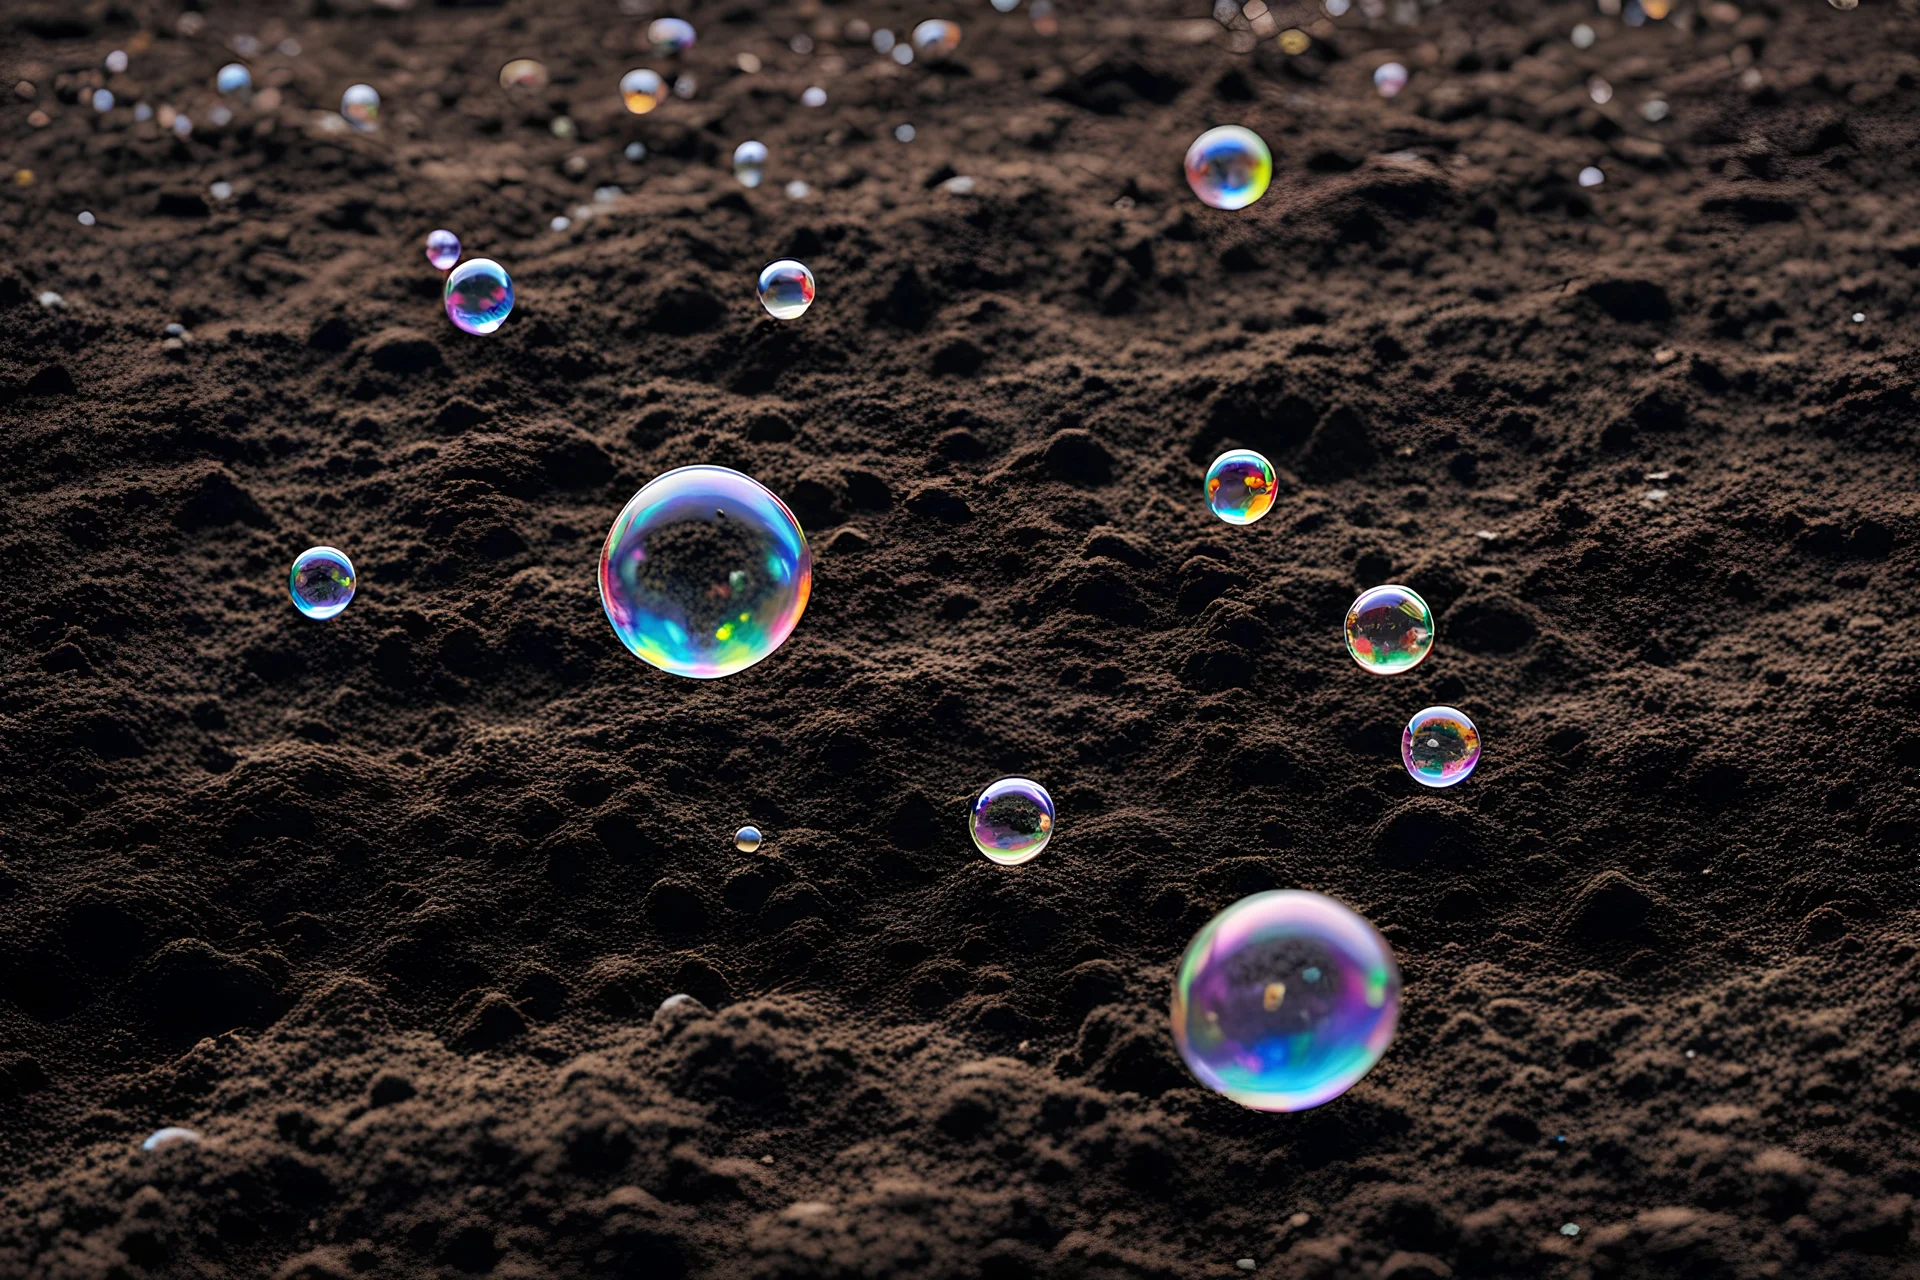 Several soap bubbles floating in the dark soil.